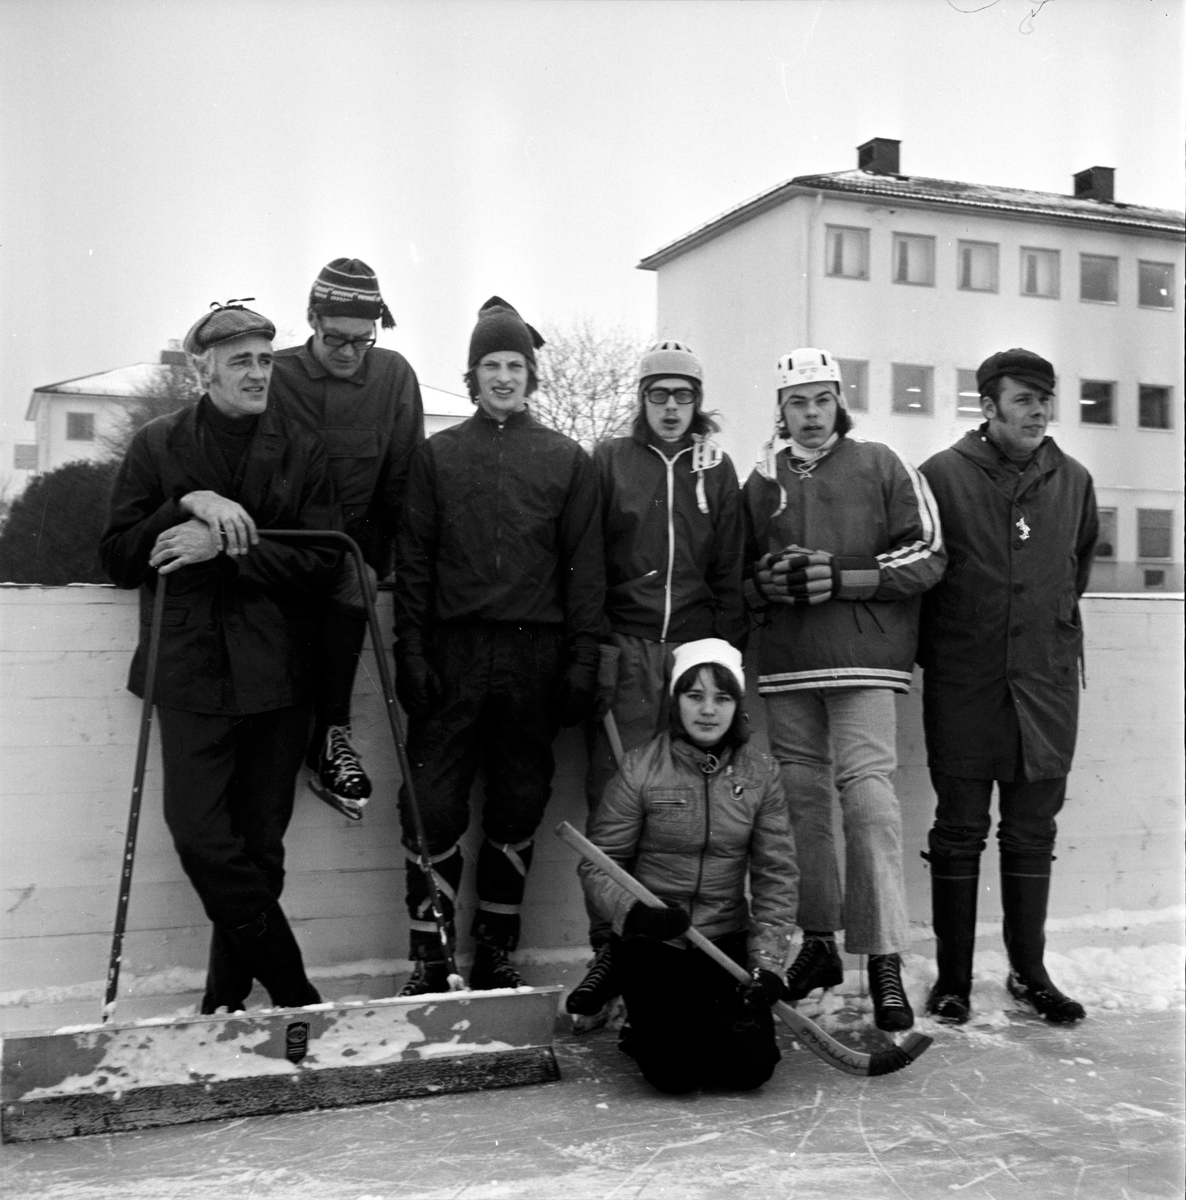 Nytorp,
"Vi gör en ishockeybana"
Februari 1973